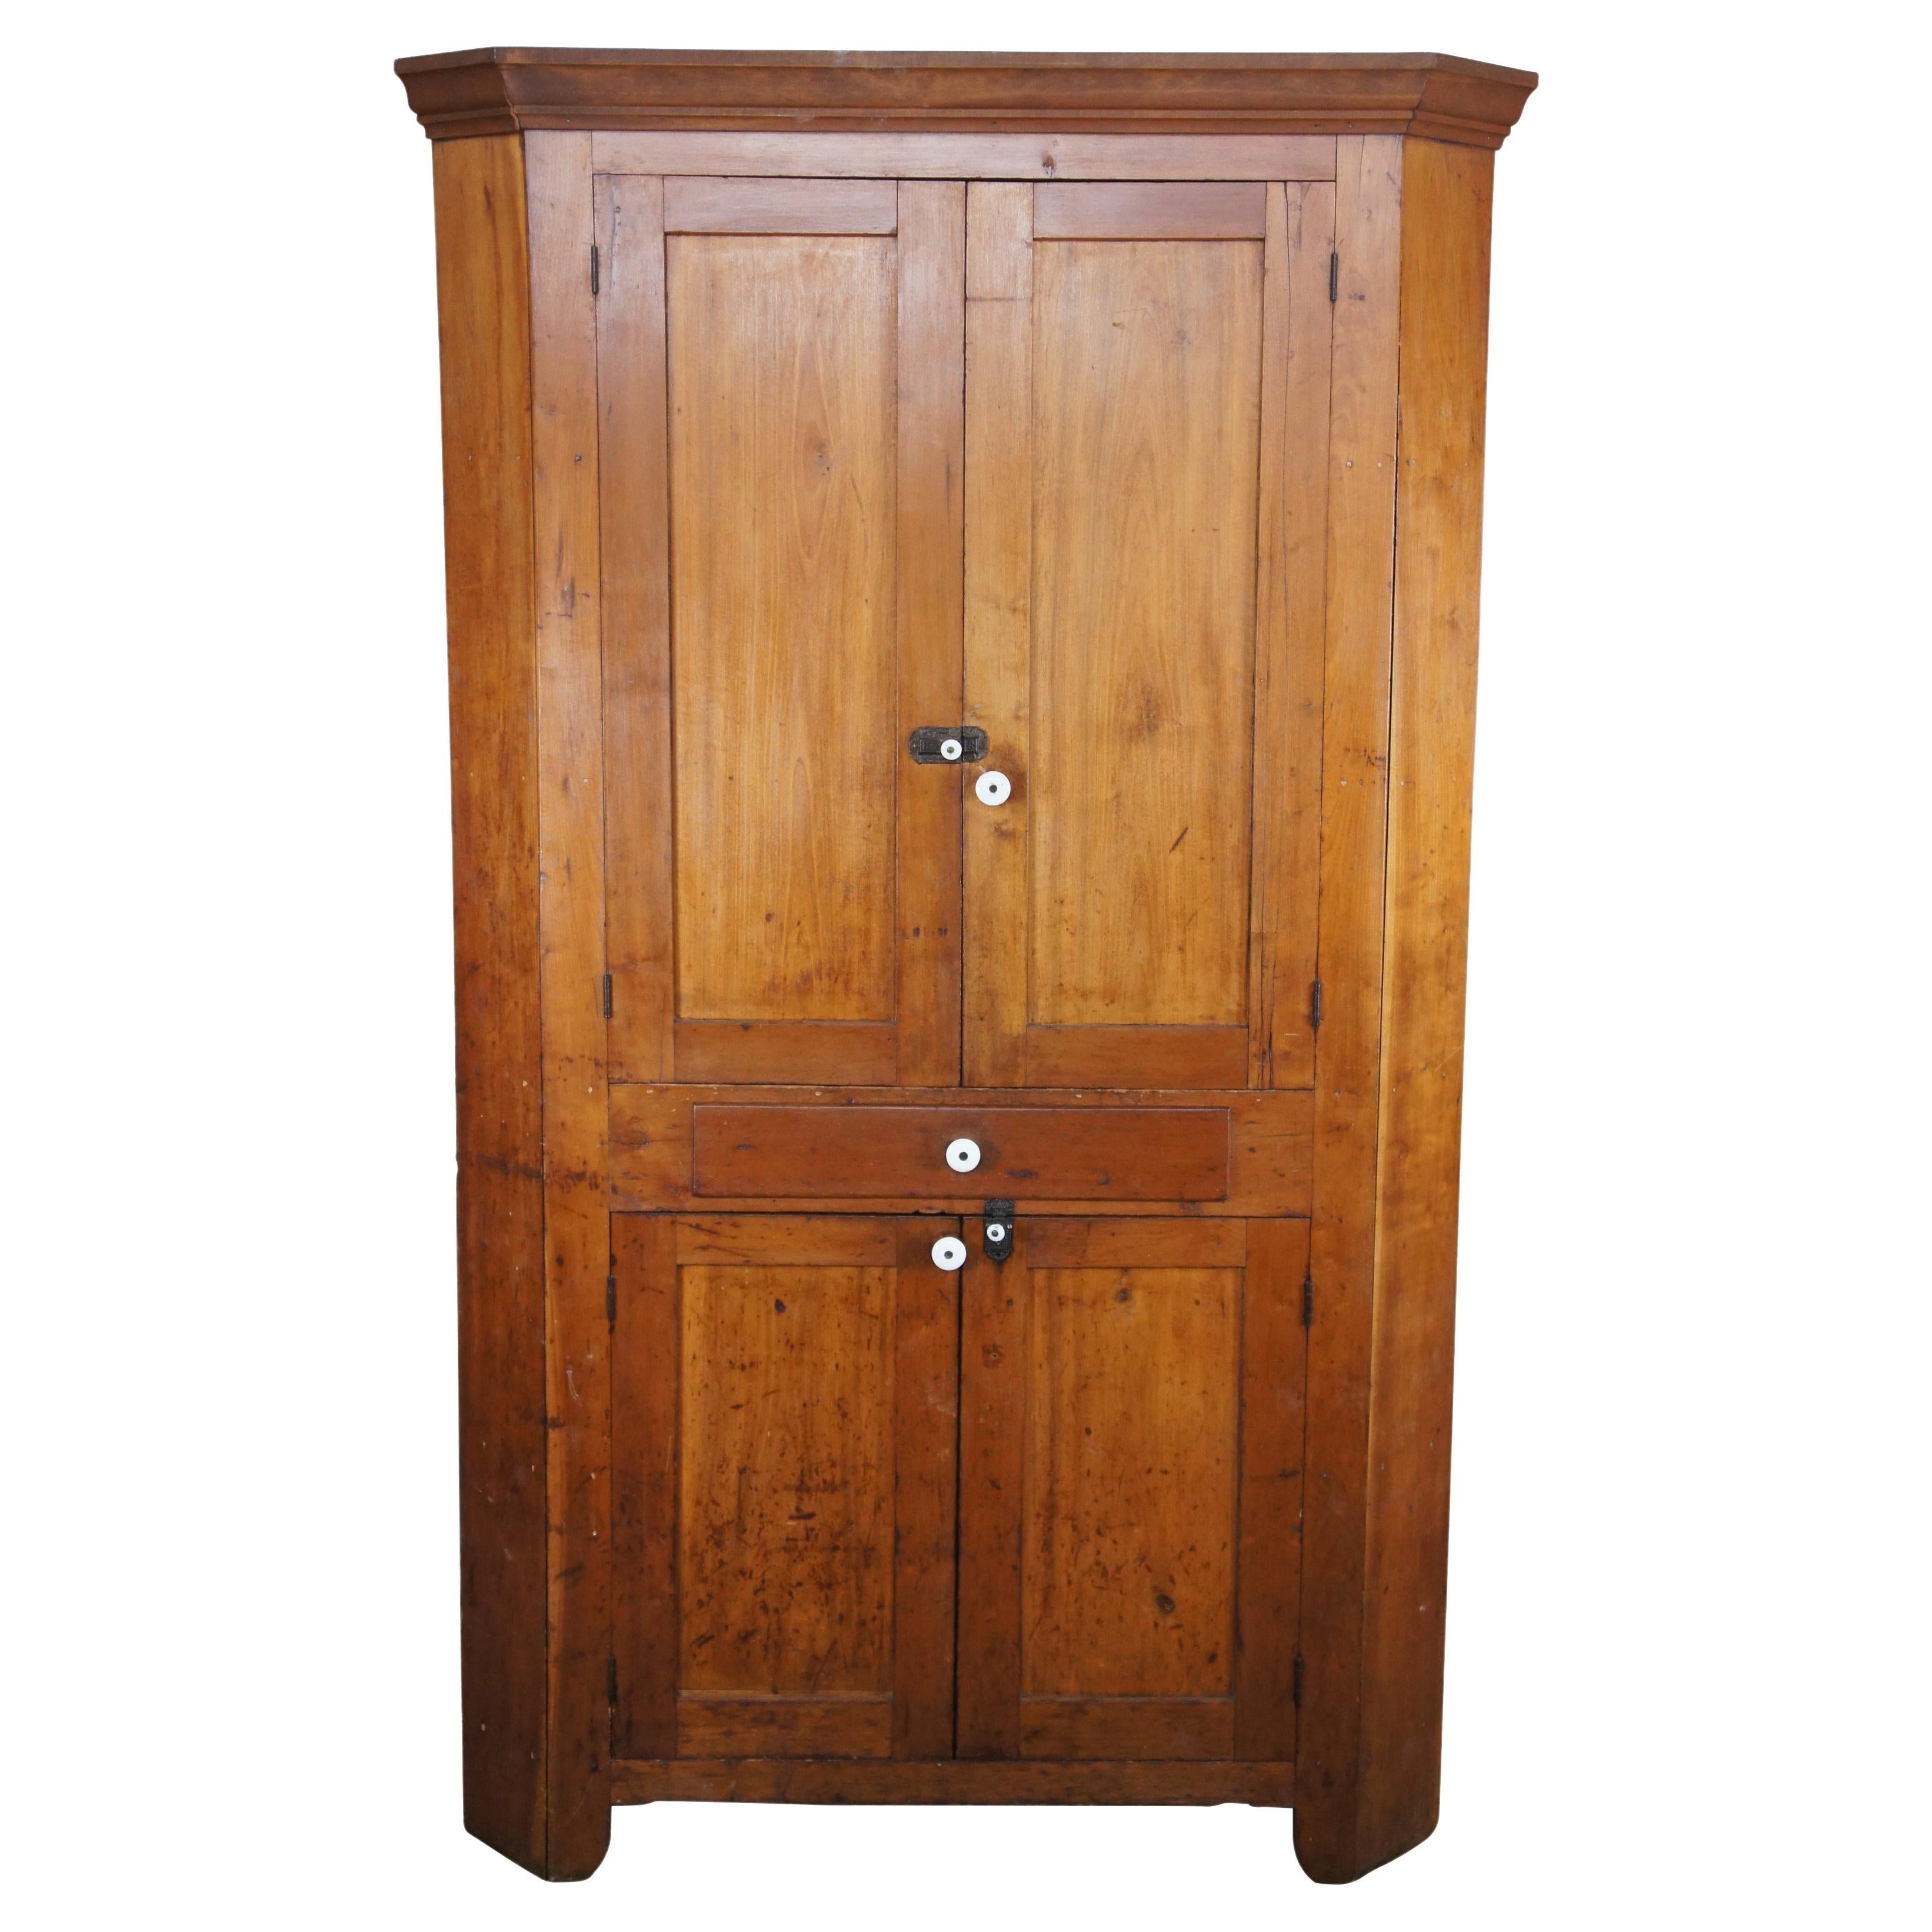 Antique 19th C. American Rustic Distressed Maple Corner Cabinet Cupboard